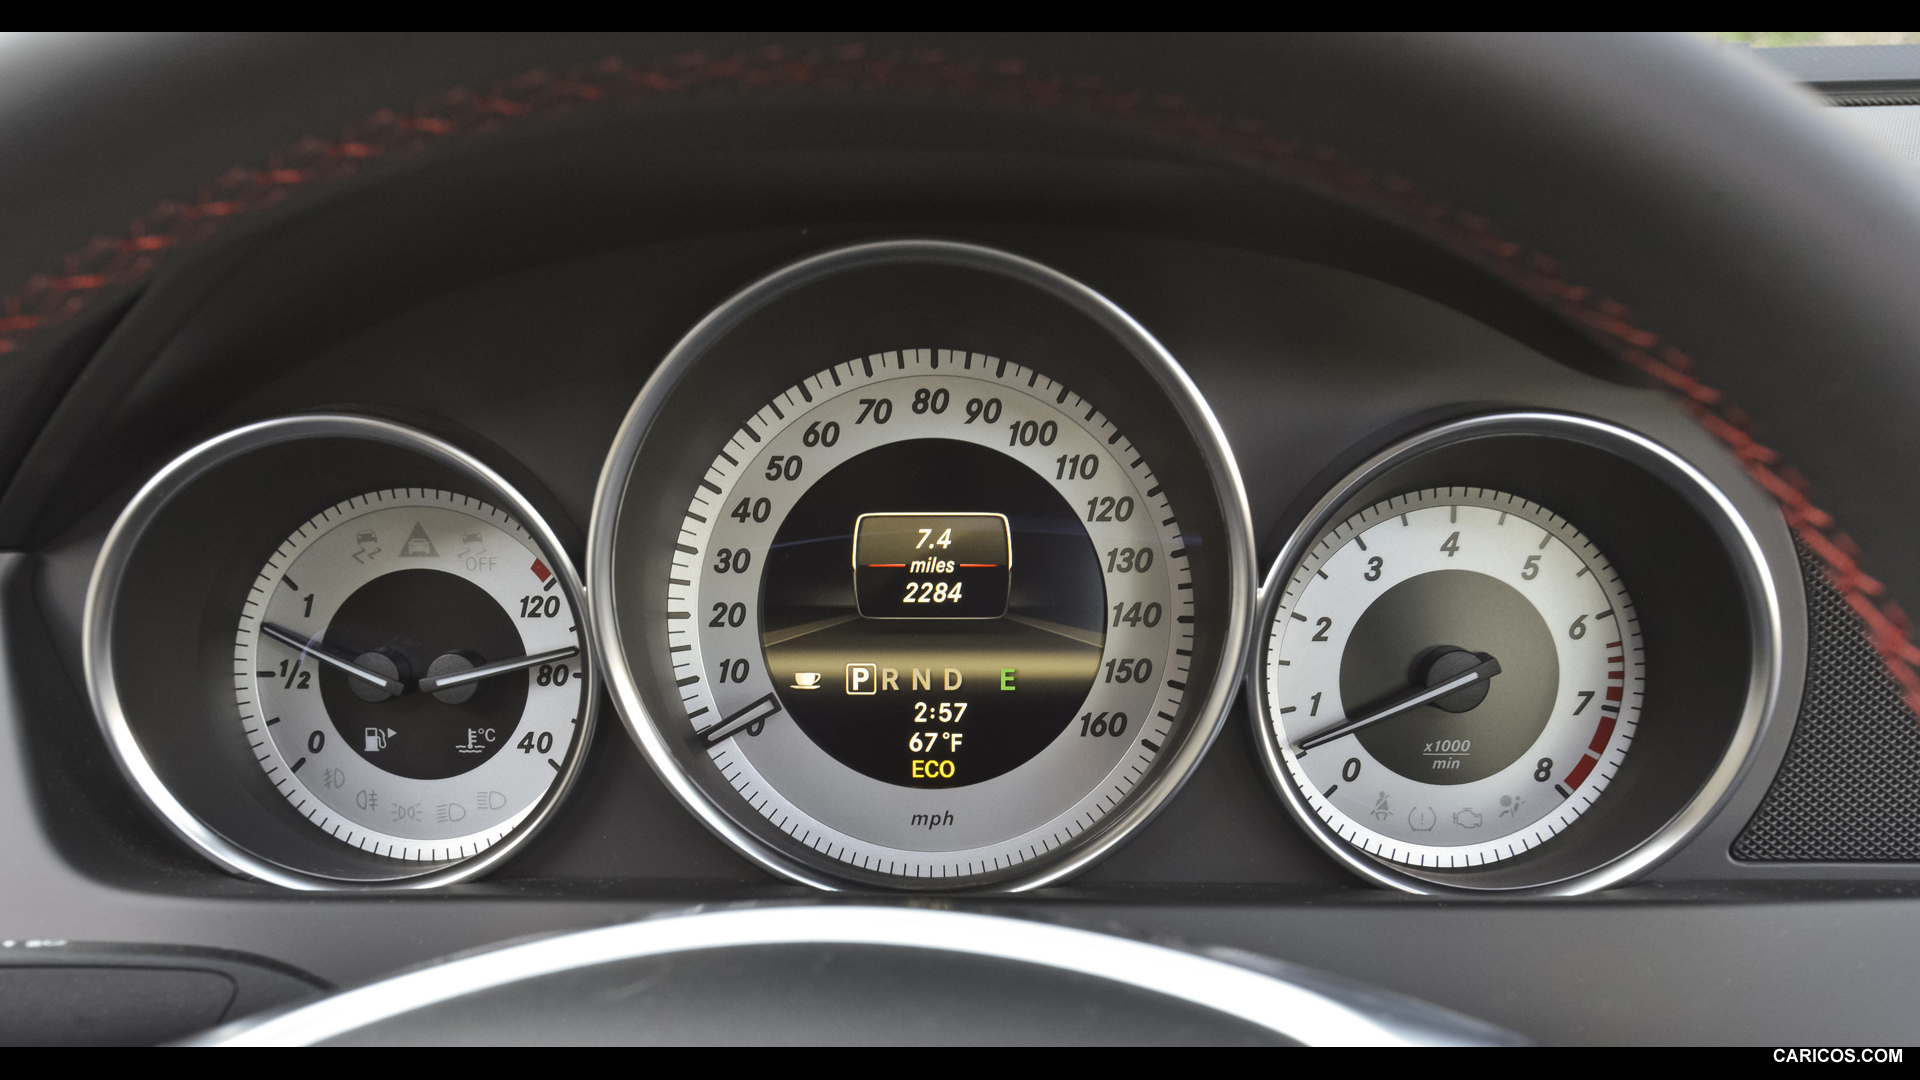 2013 Mercedes-Benz C300 4MATIC Sedan Sport Package Plus  - Instrument Cluster, #85 of 122